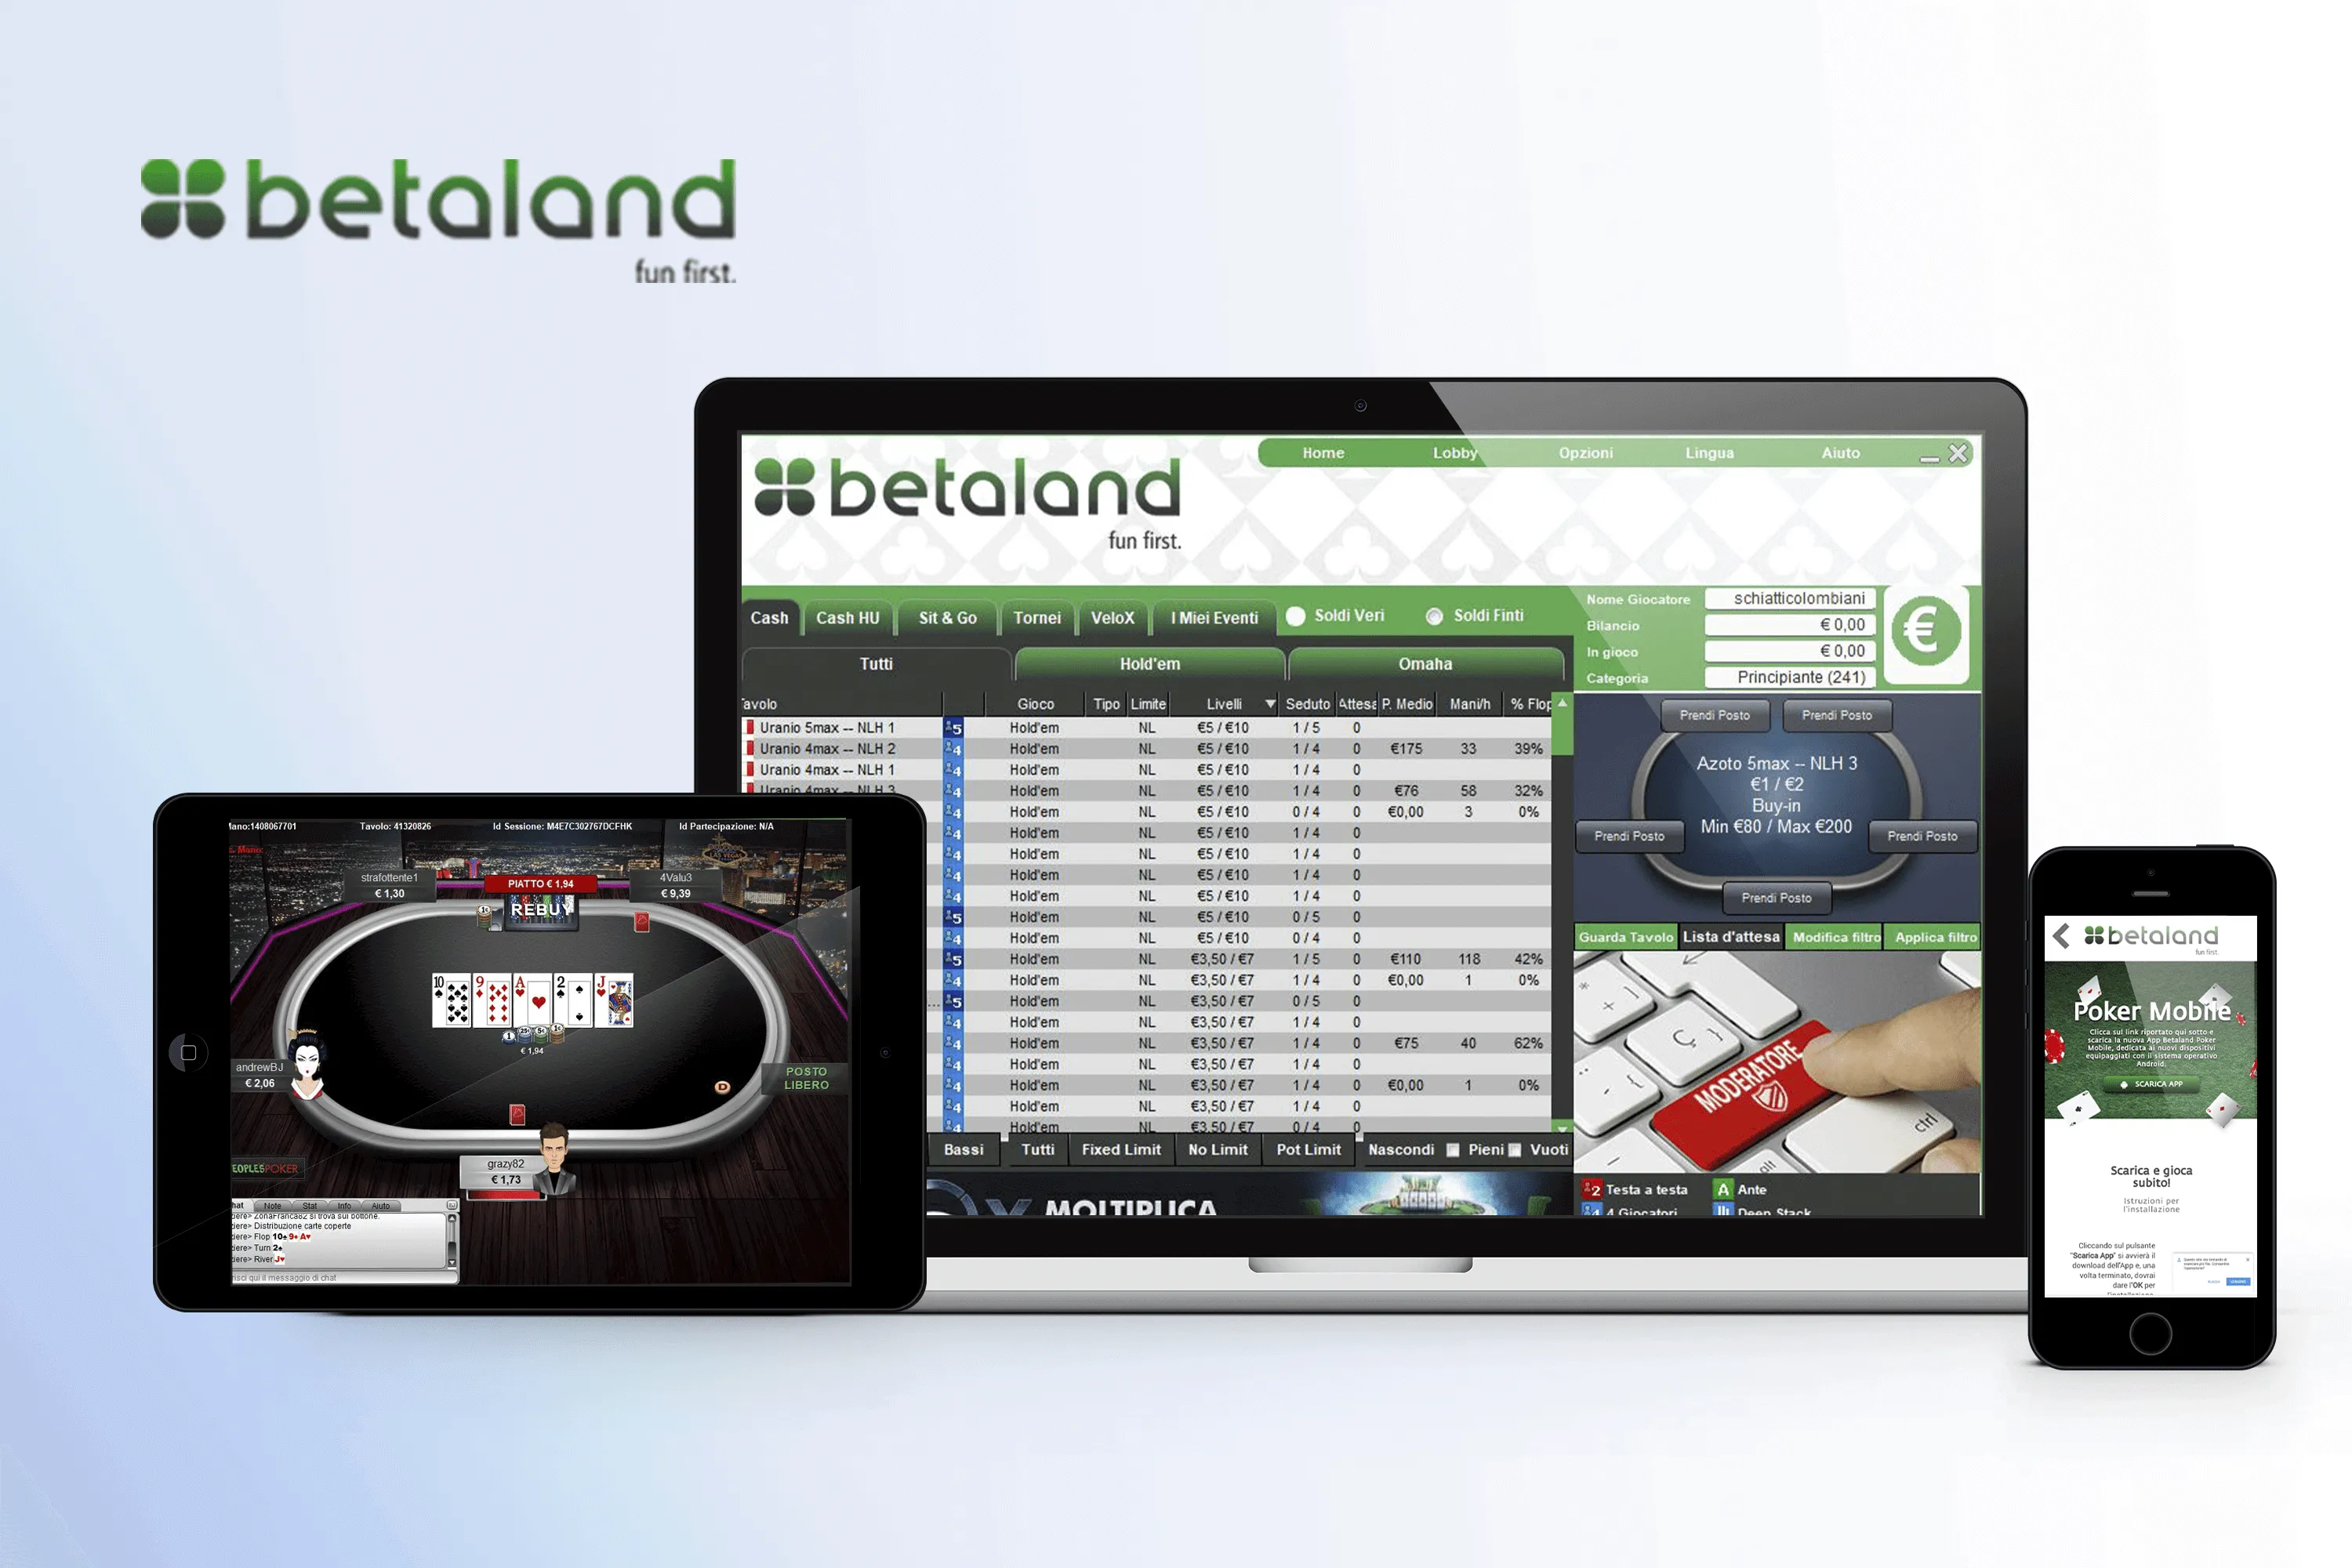 Betaland Poker mobile